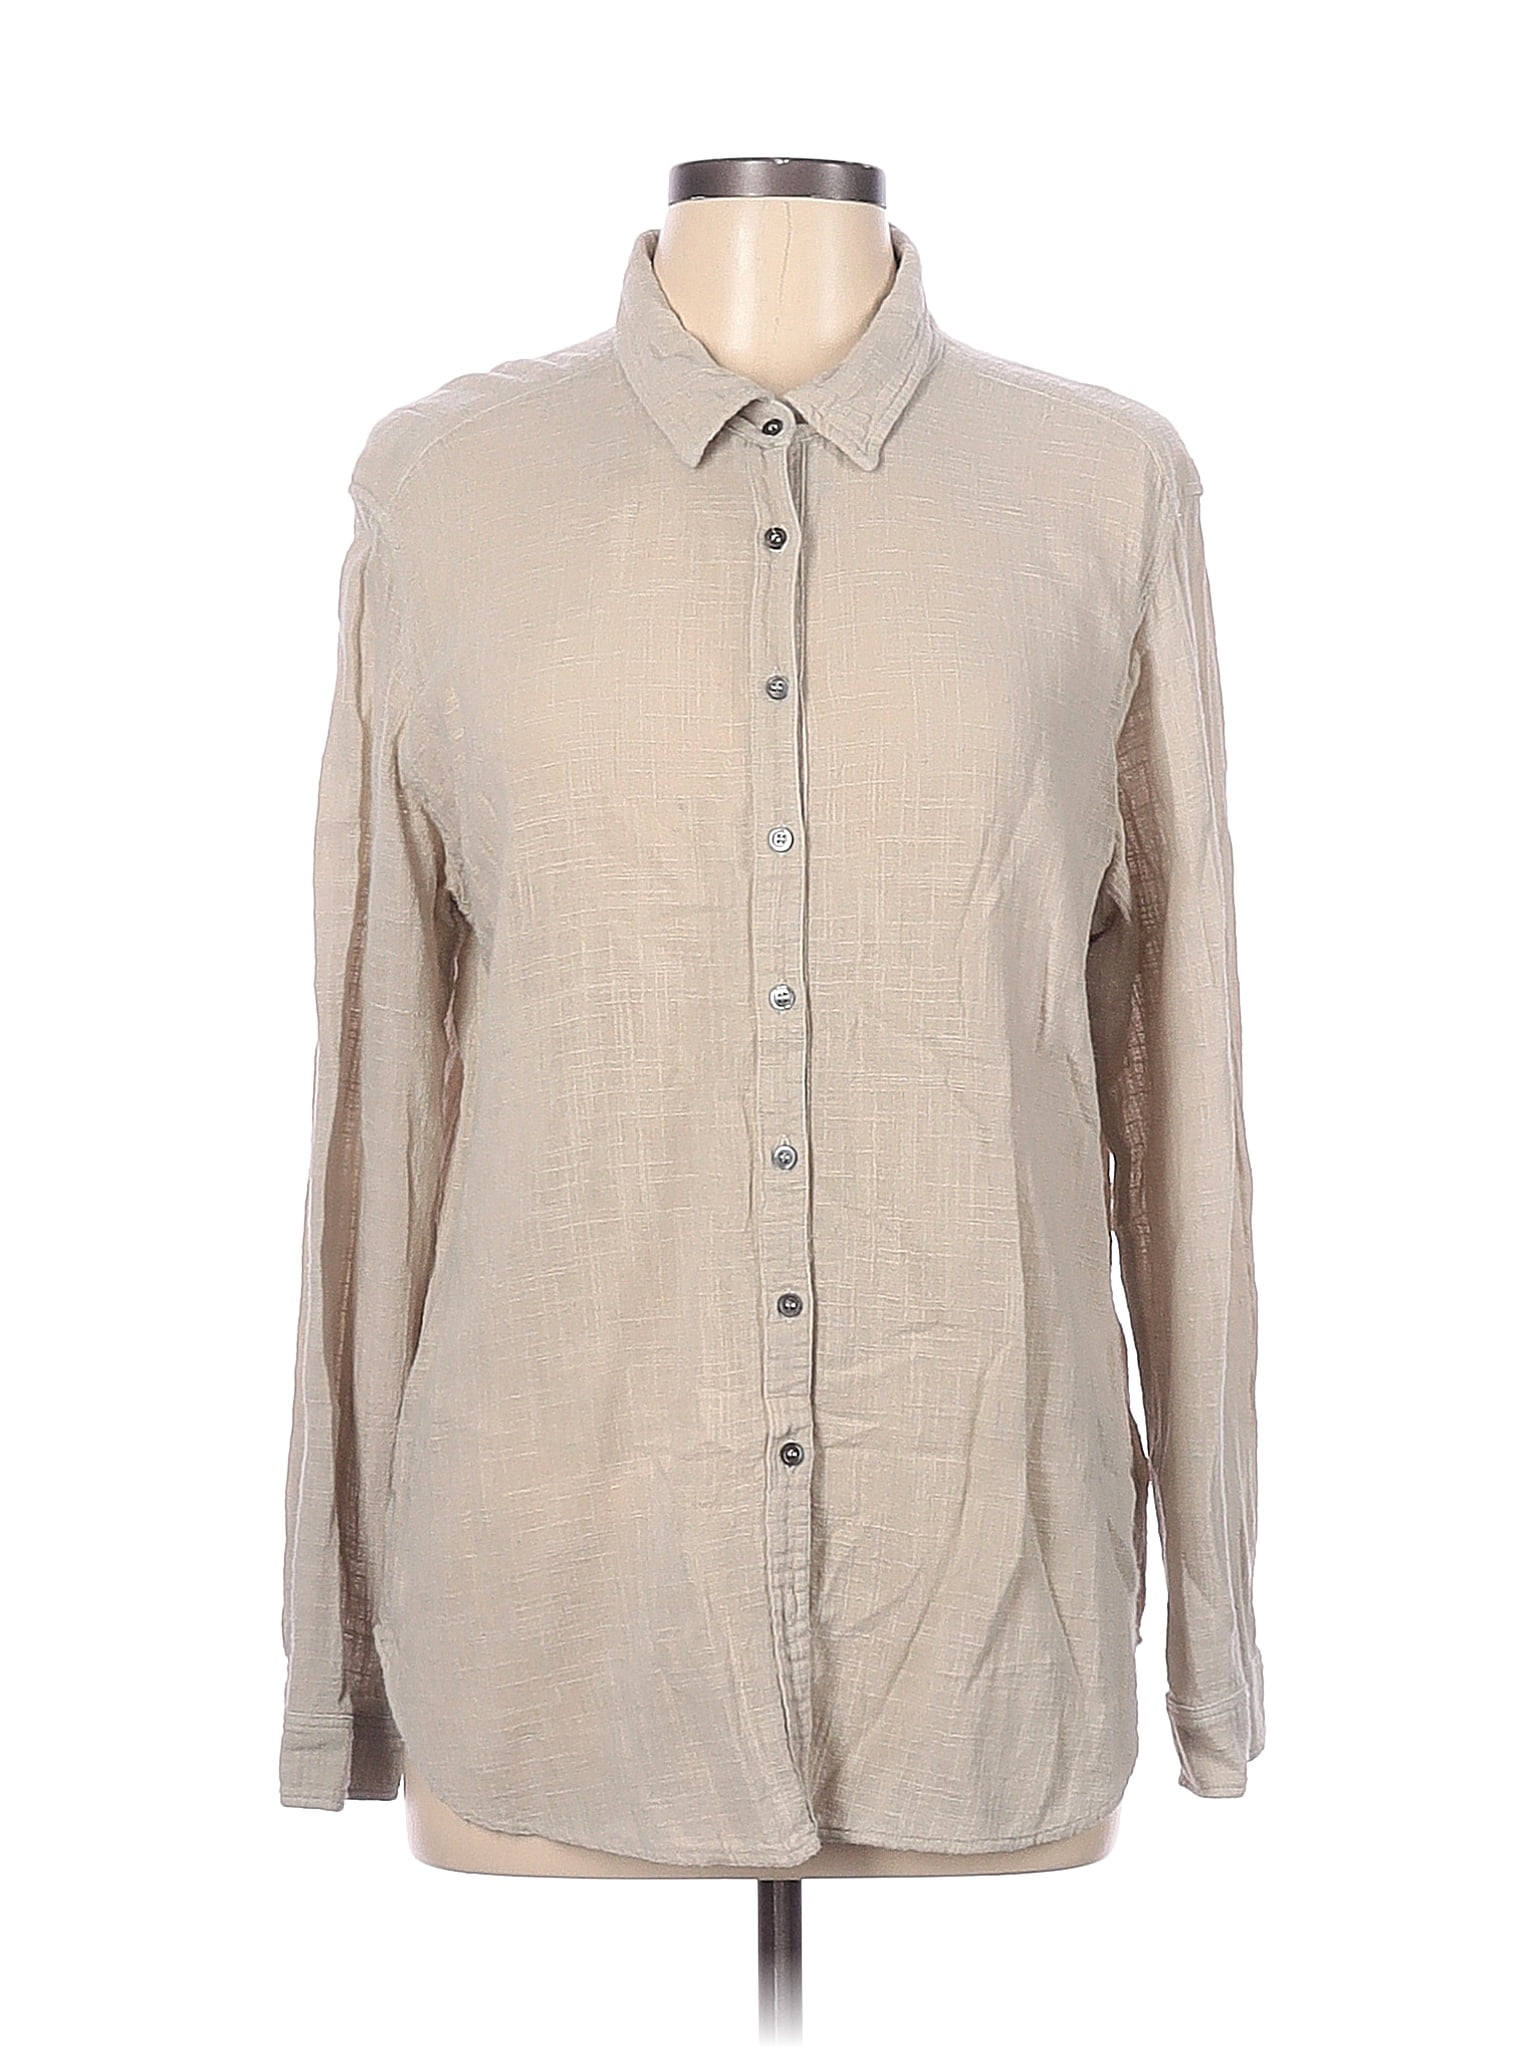 Xirena 100% Cotton Tan Long Sleeve Button-Down Shirt Size L - 81% off ...